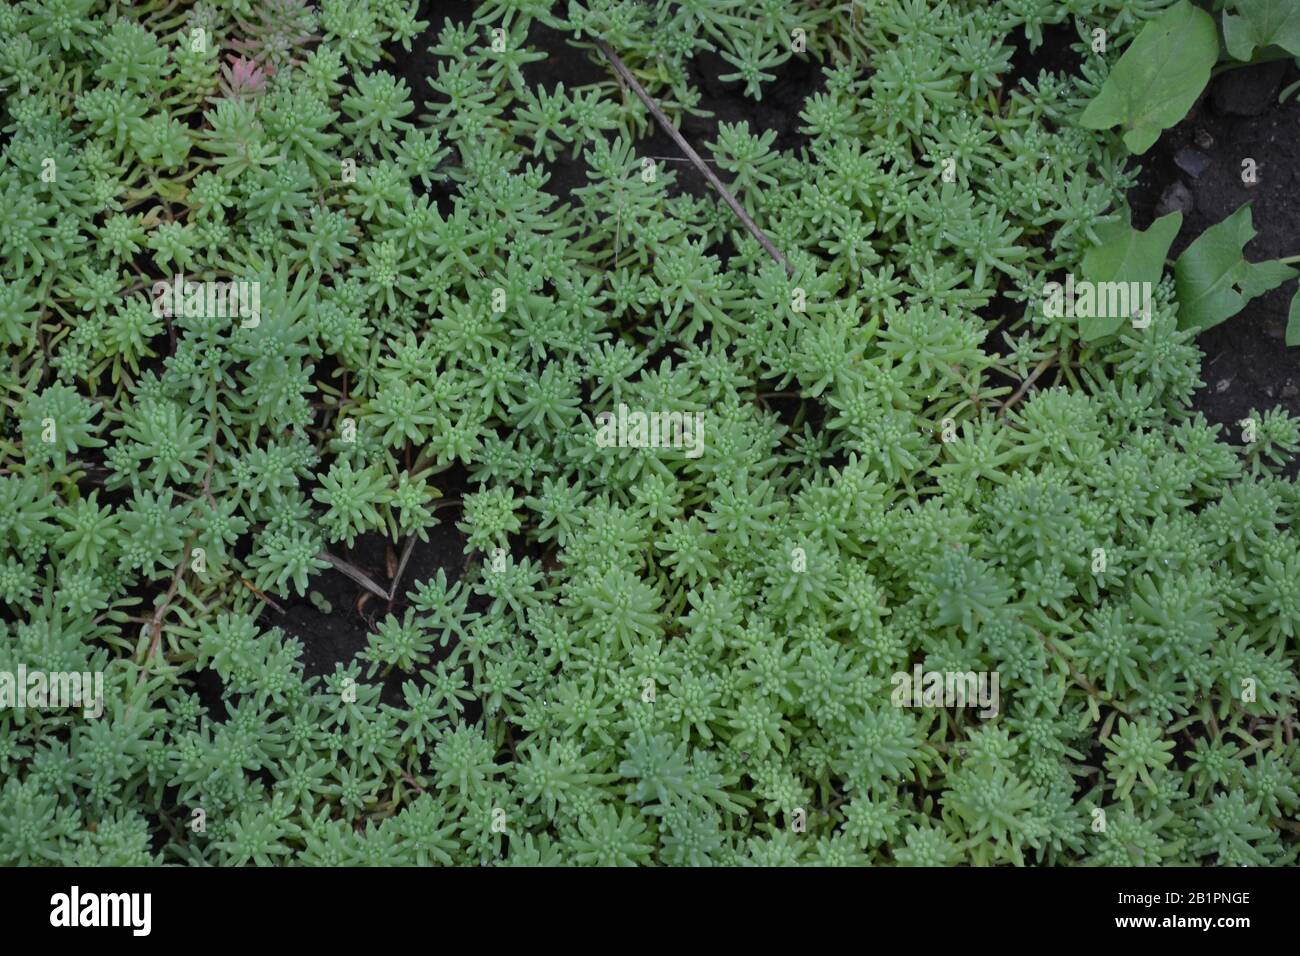 Stonecrop. Hare cabbage. Sedum. Green moss. Decorative grassy carpet. Green flower bed decoration. Garden. Green background. Horizontal photo Stock Photo